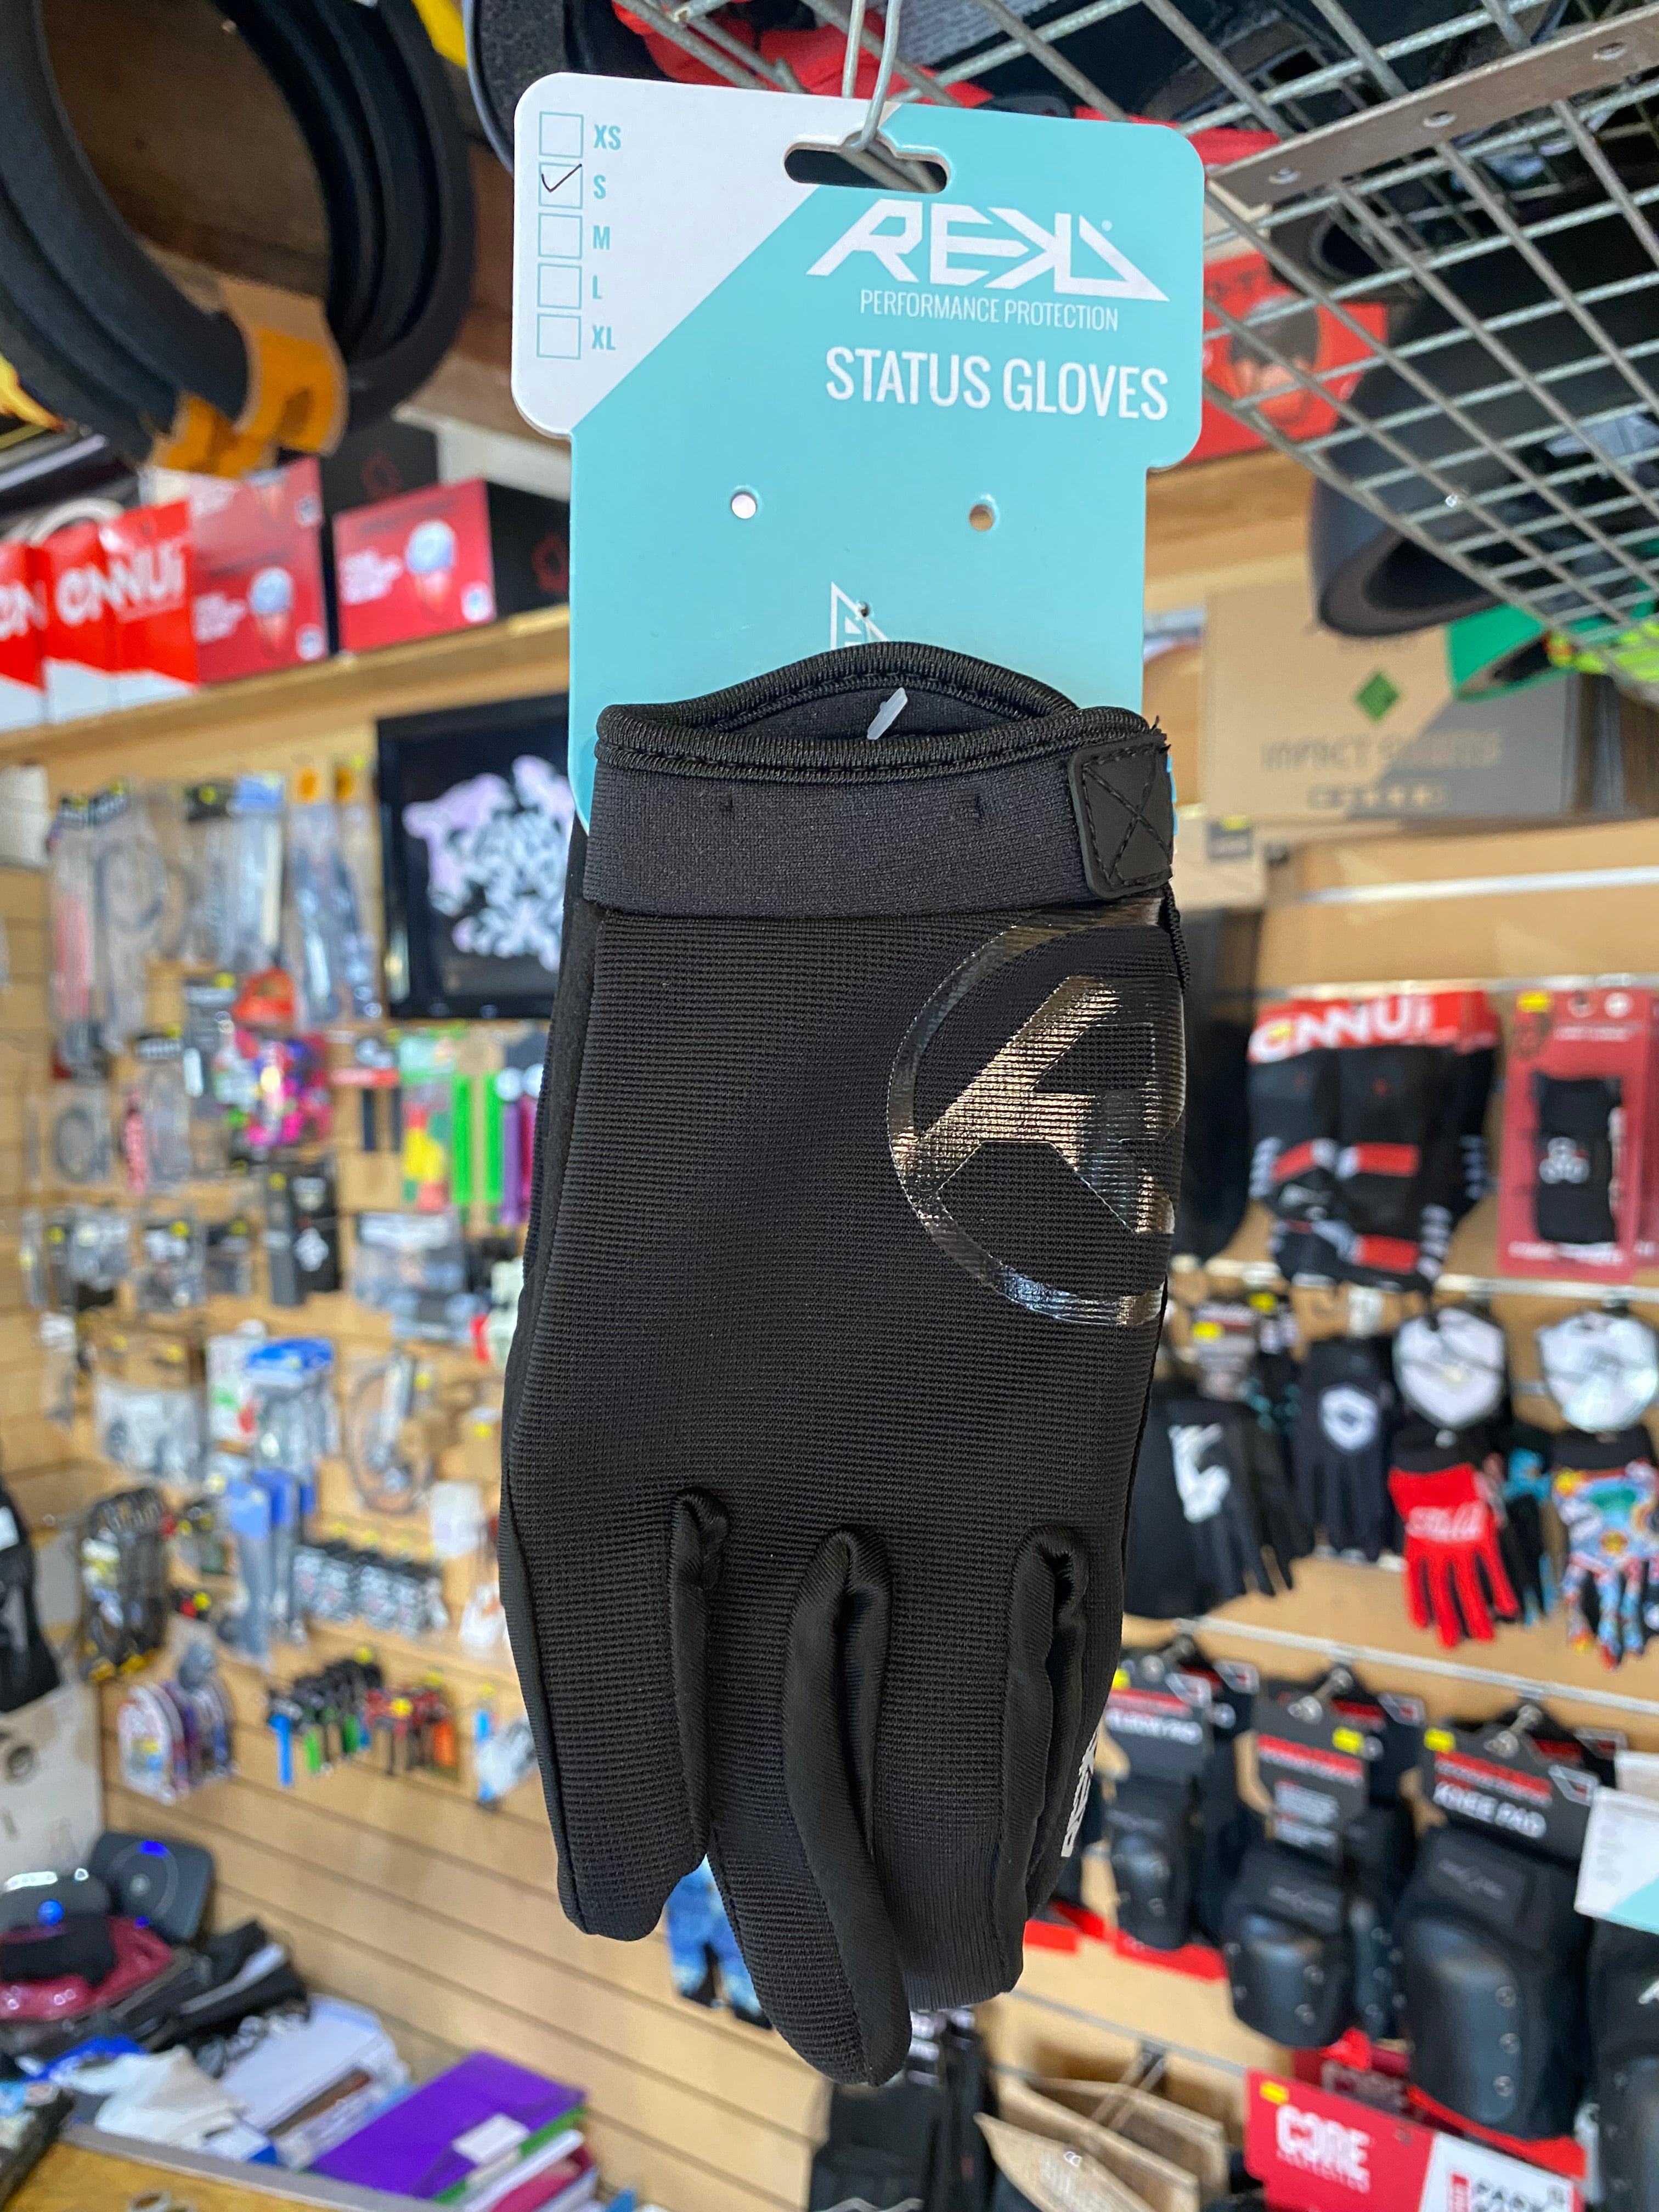 Rekd Status Gloves